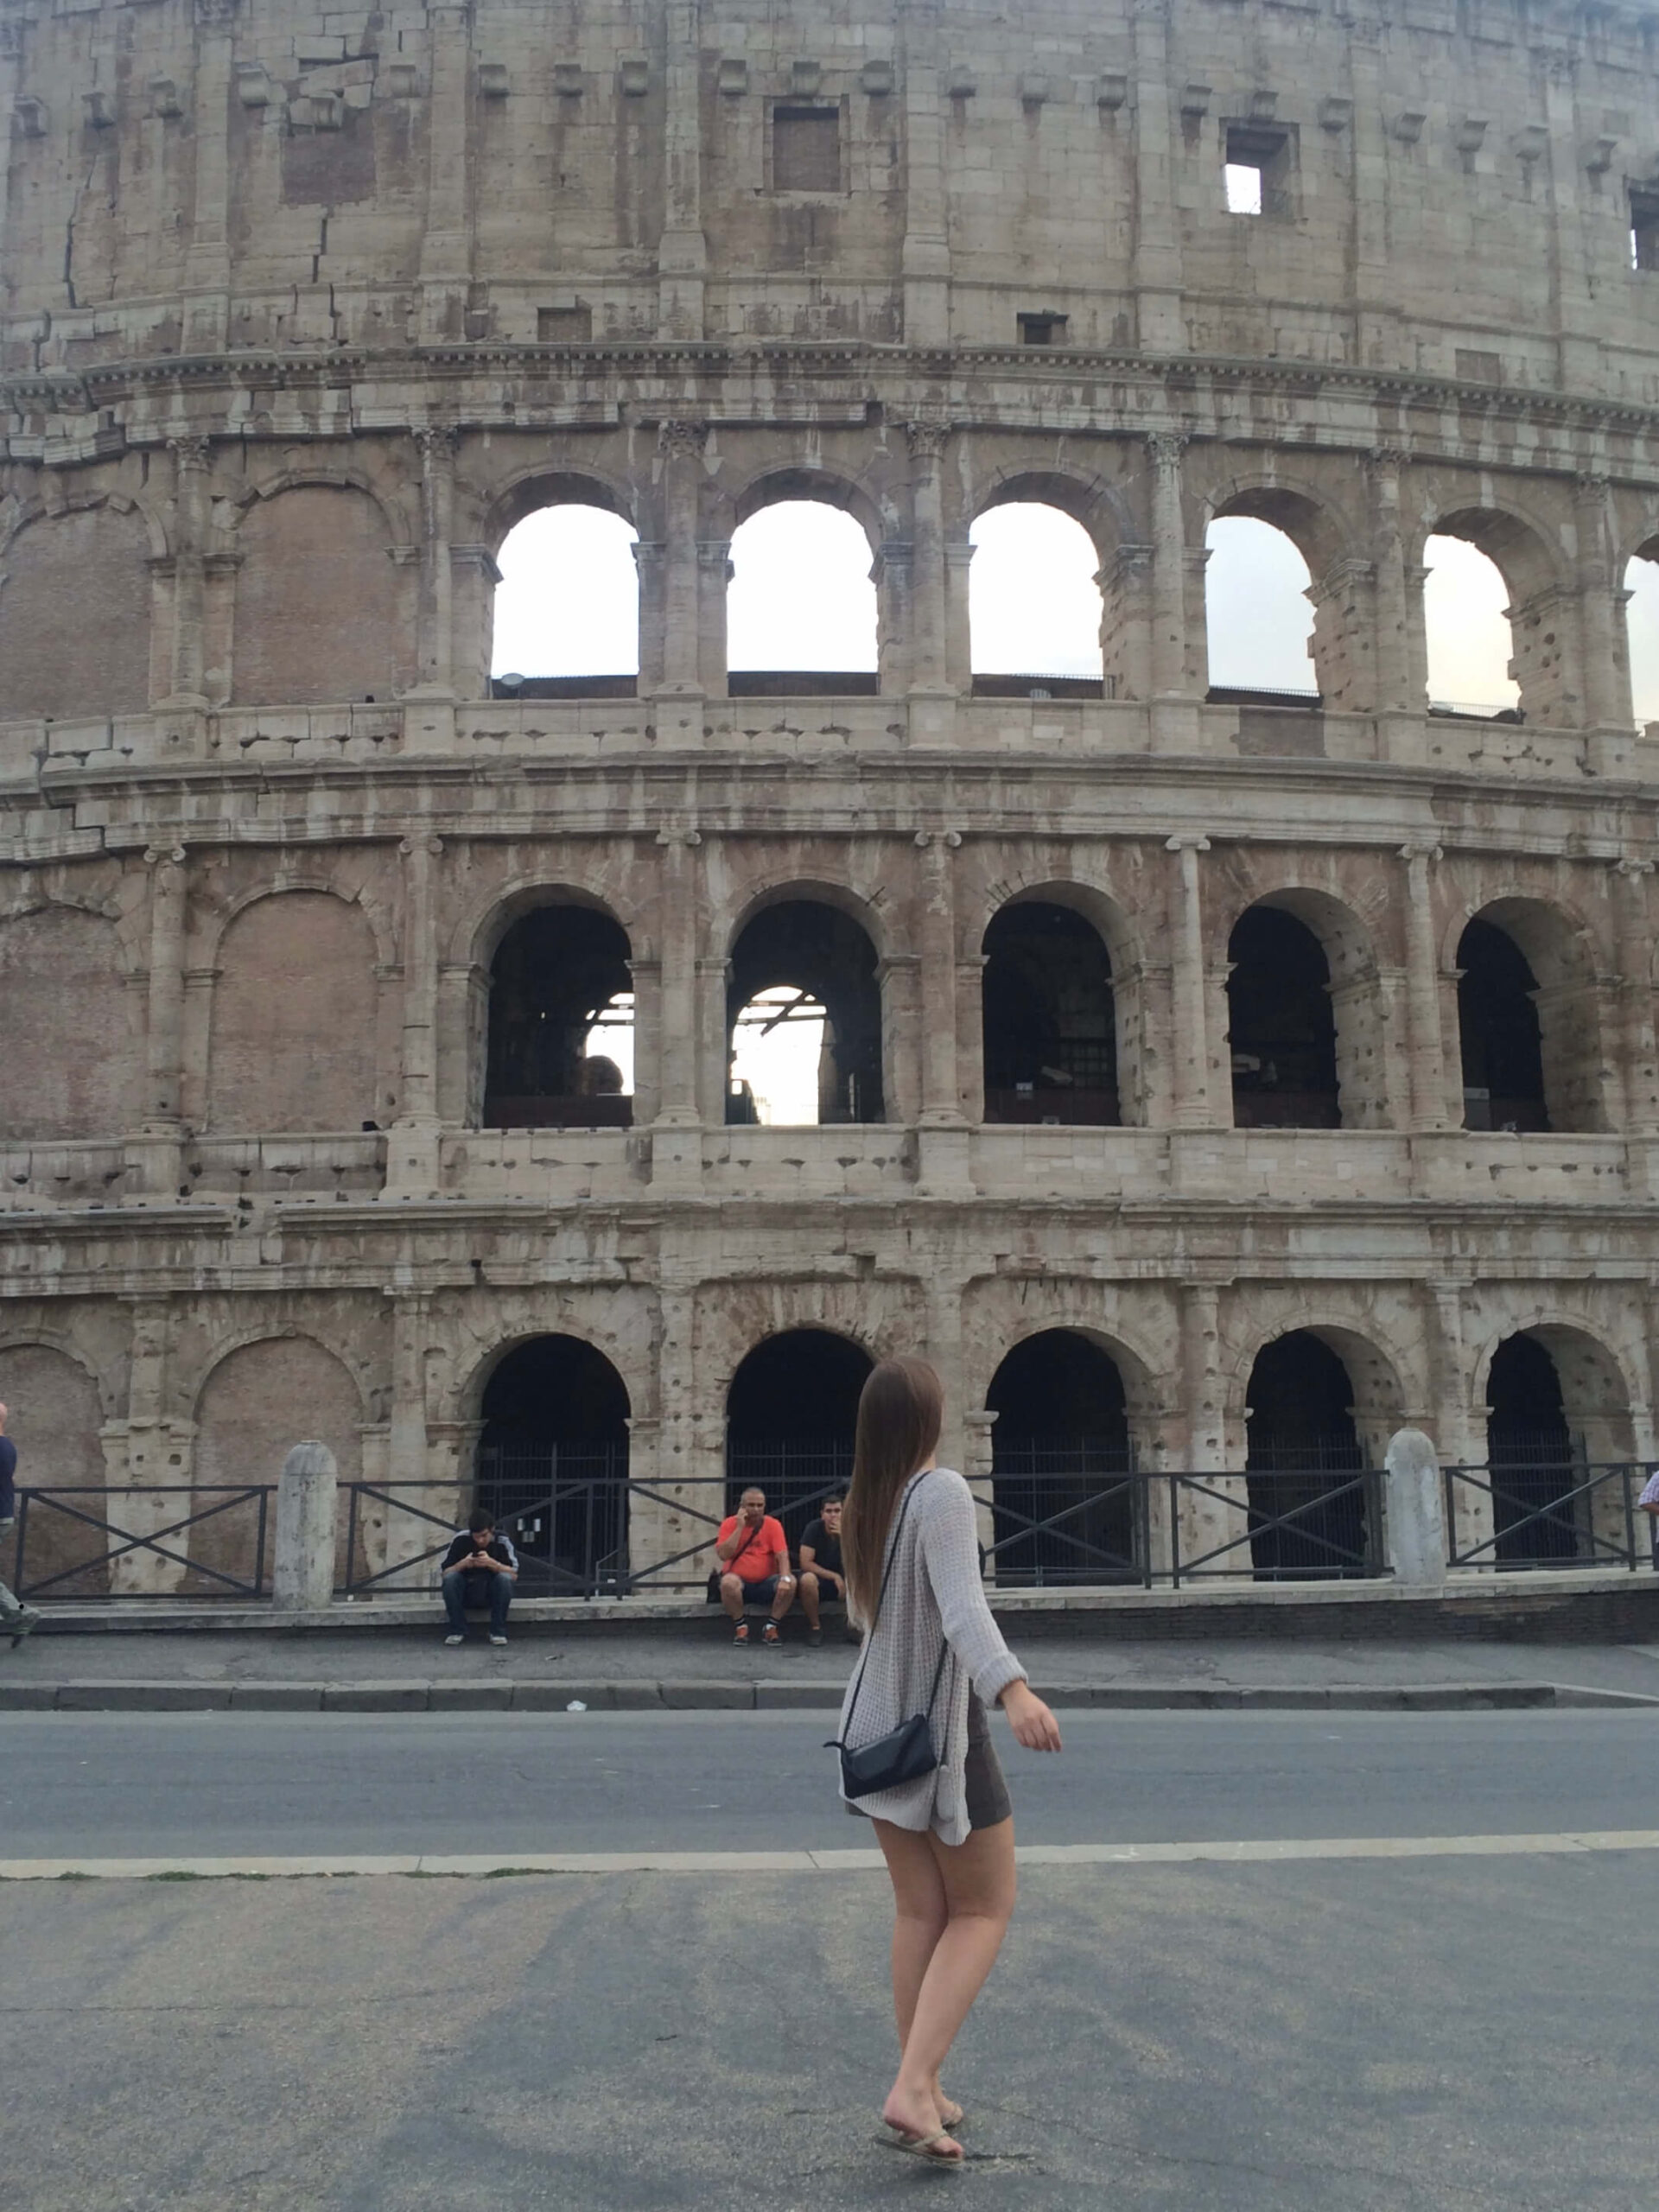 Rome Italy Coliseum